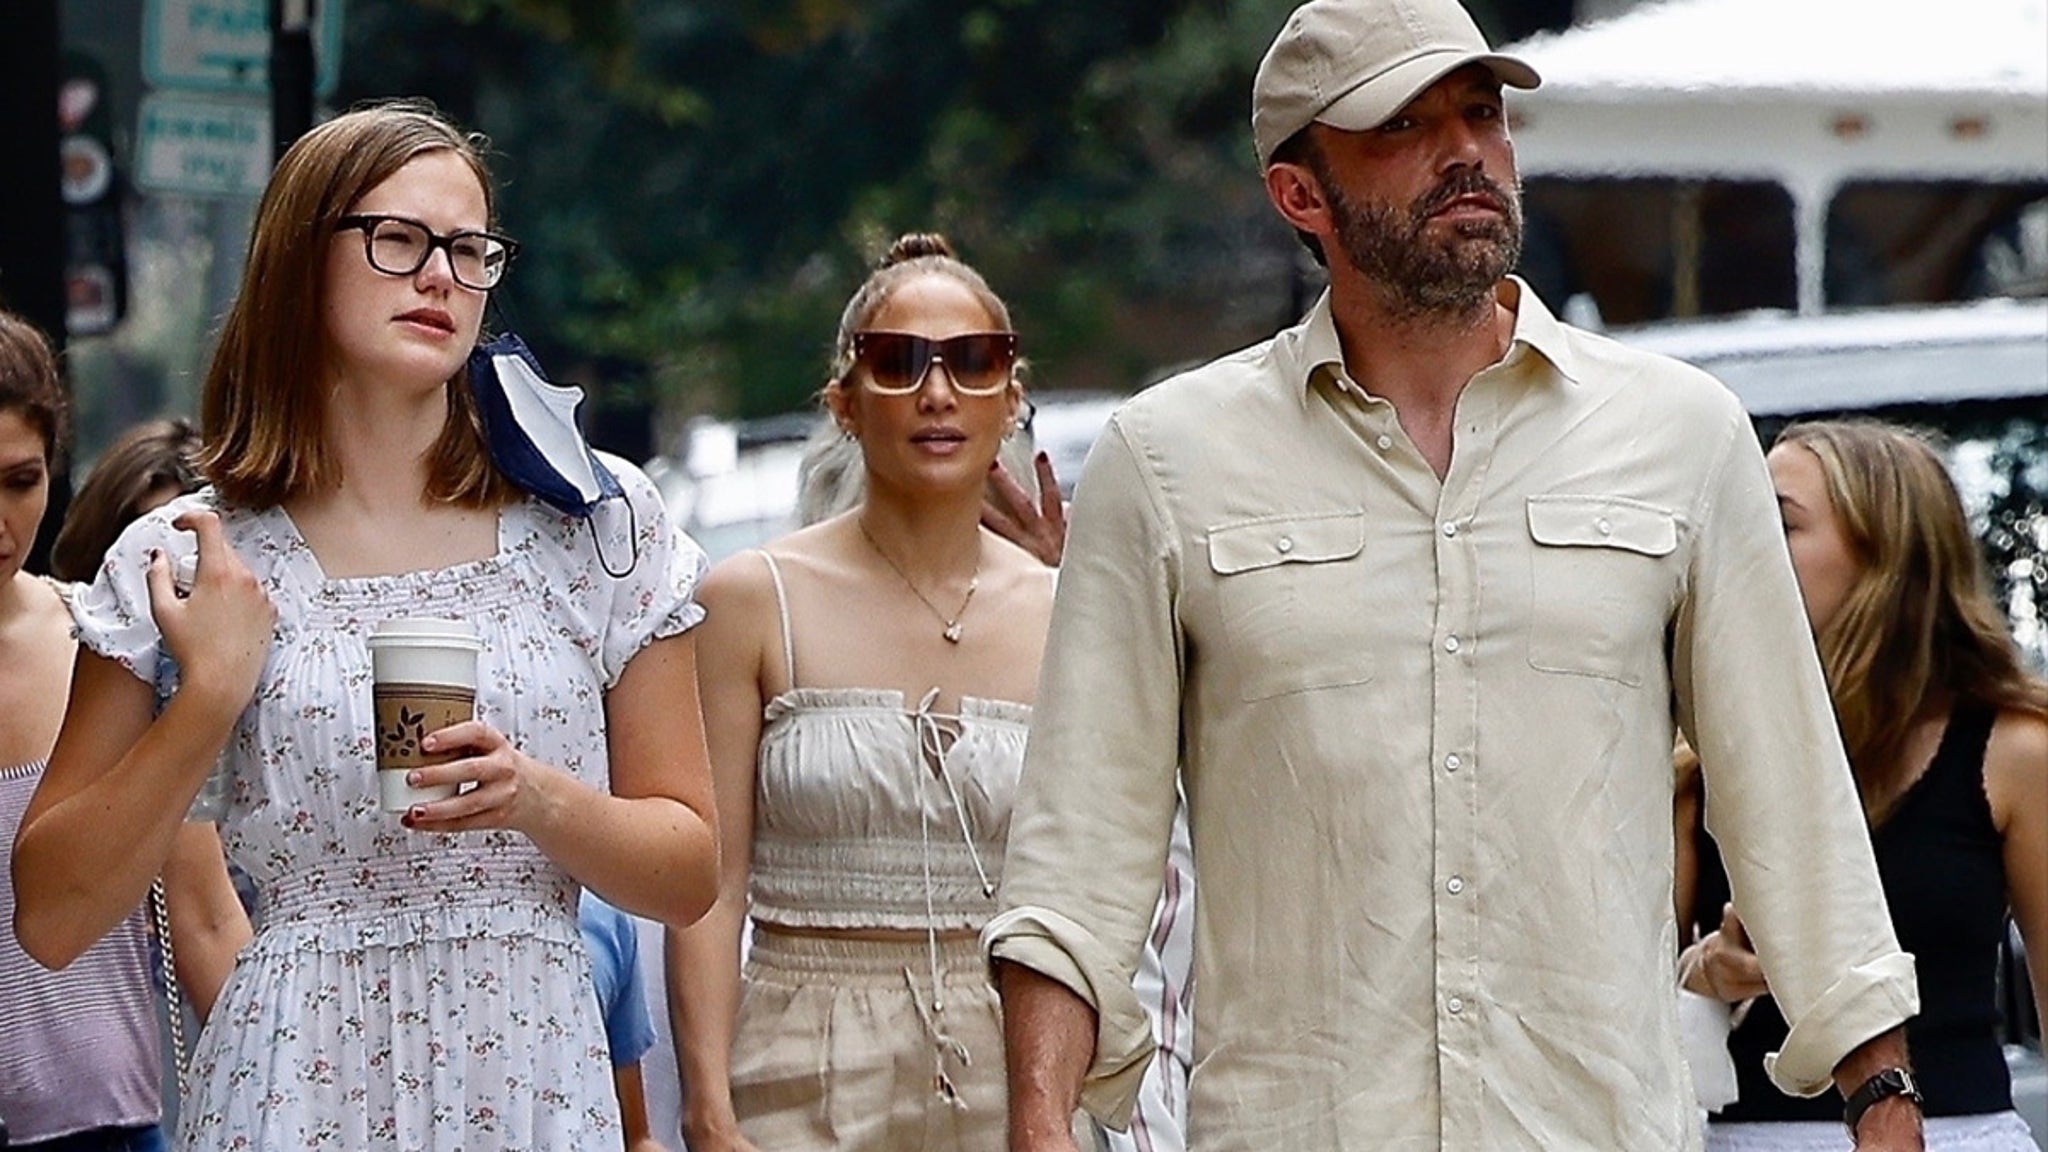 Ben Affleck and Jennifer Lopez Arrive in Georgia for Weekend Wedding Festivities